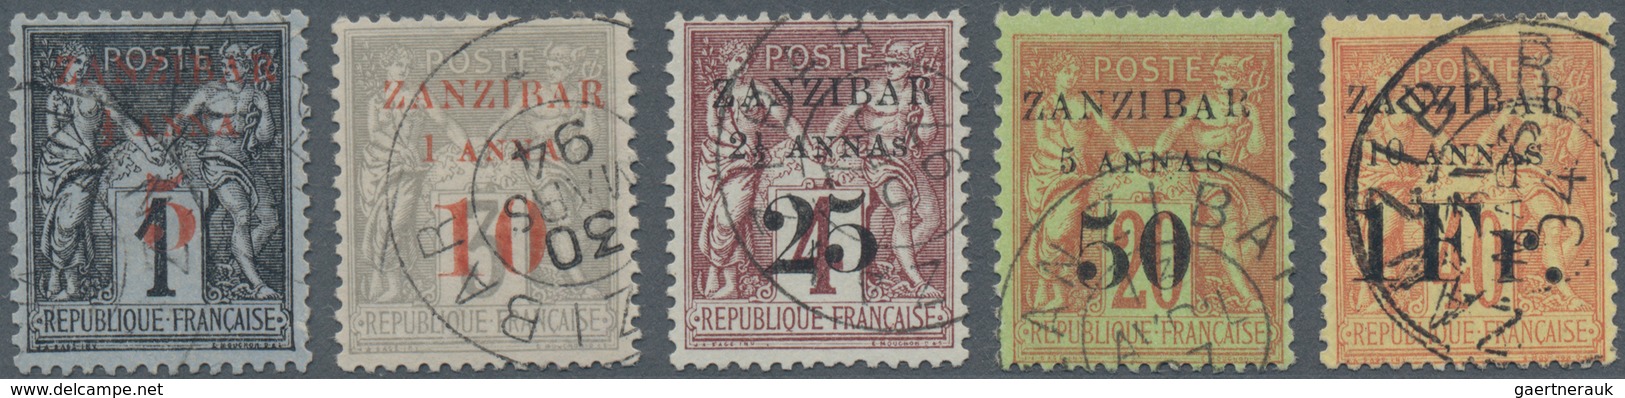 Zanzibar: 1894, 1/2 A Black To 10 A Orange Overprint Stamps Cancelled With Double Circle Postmarks, - Zanzibar (...-1963)